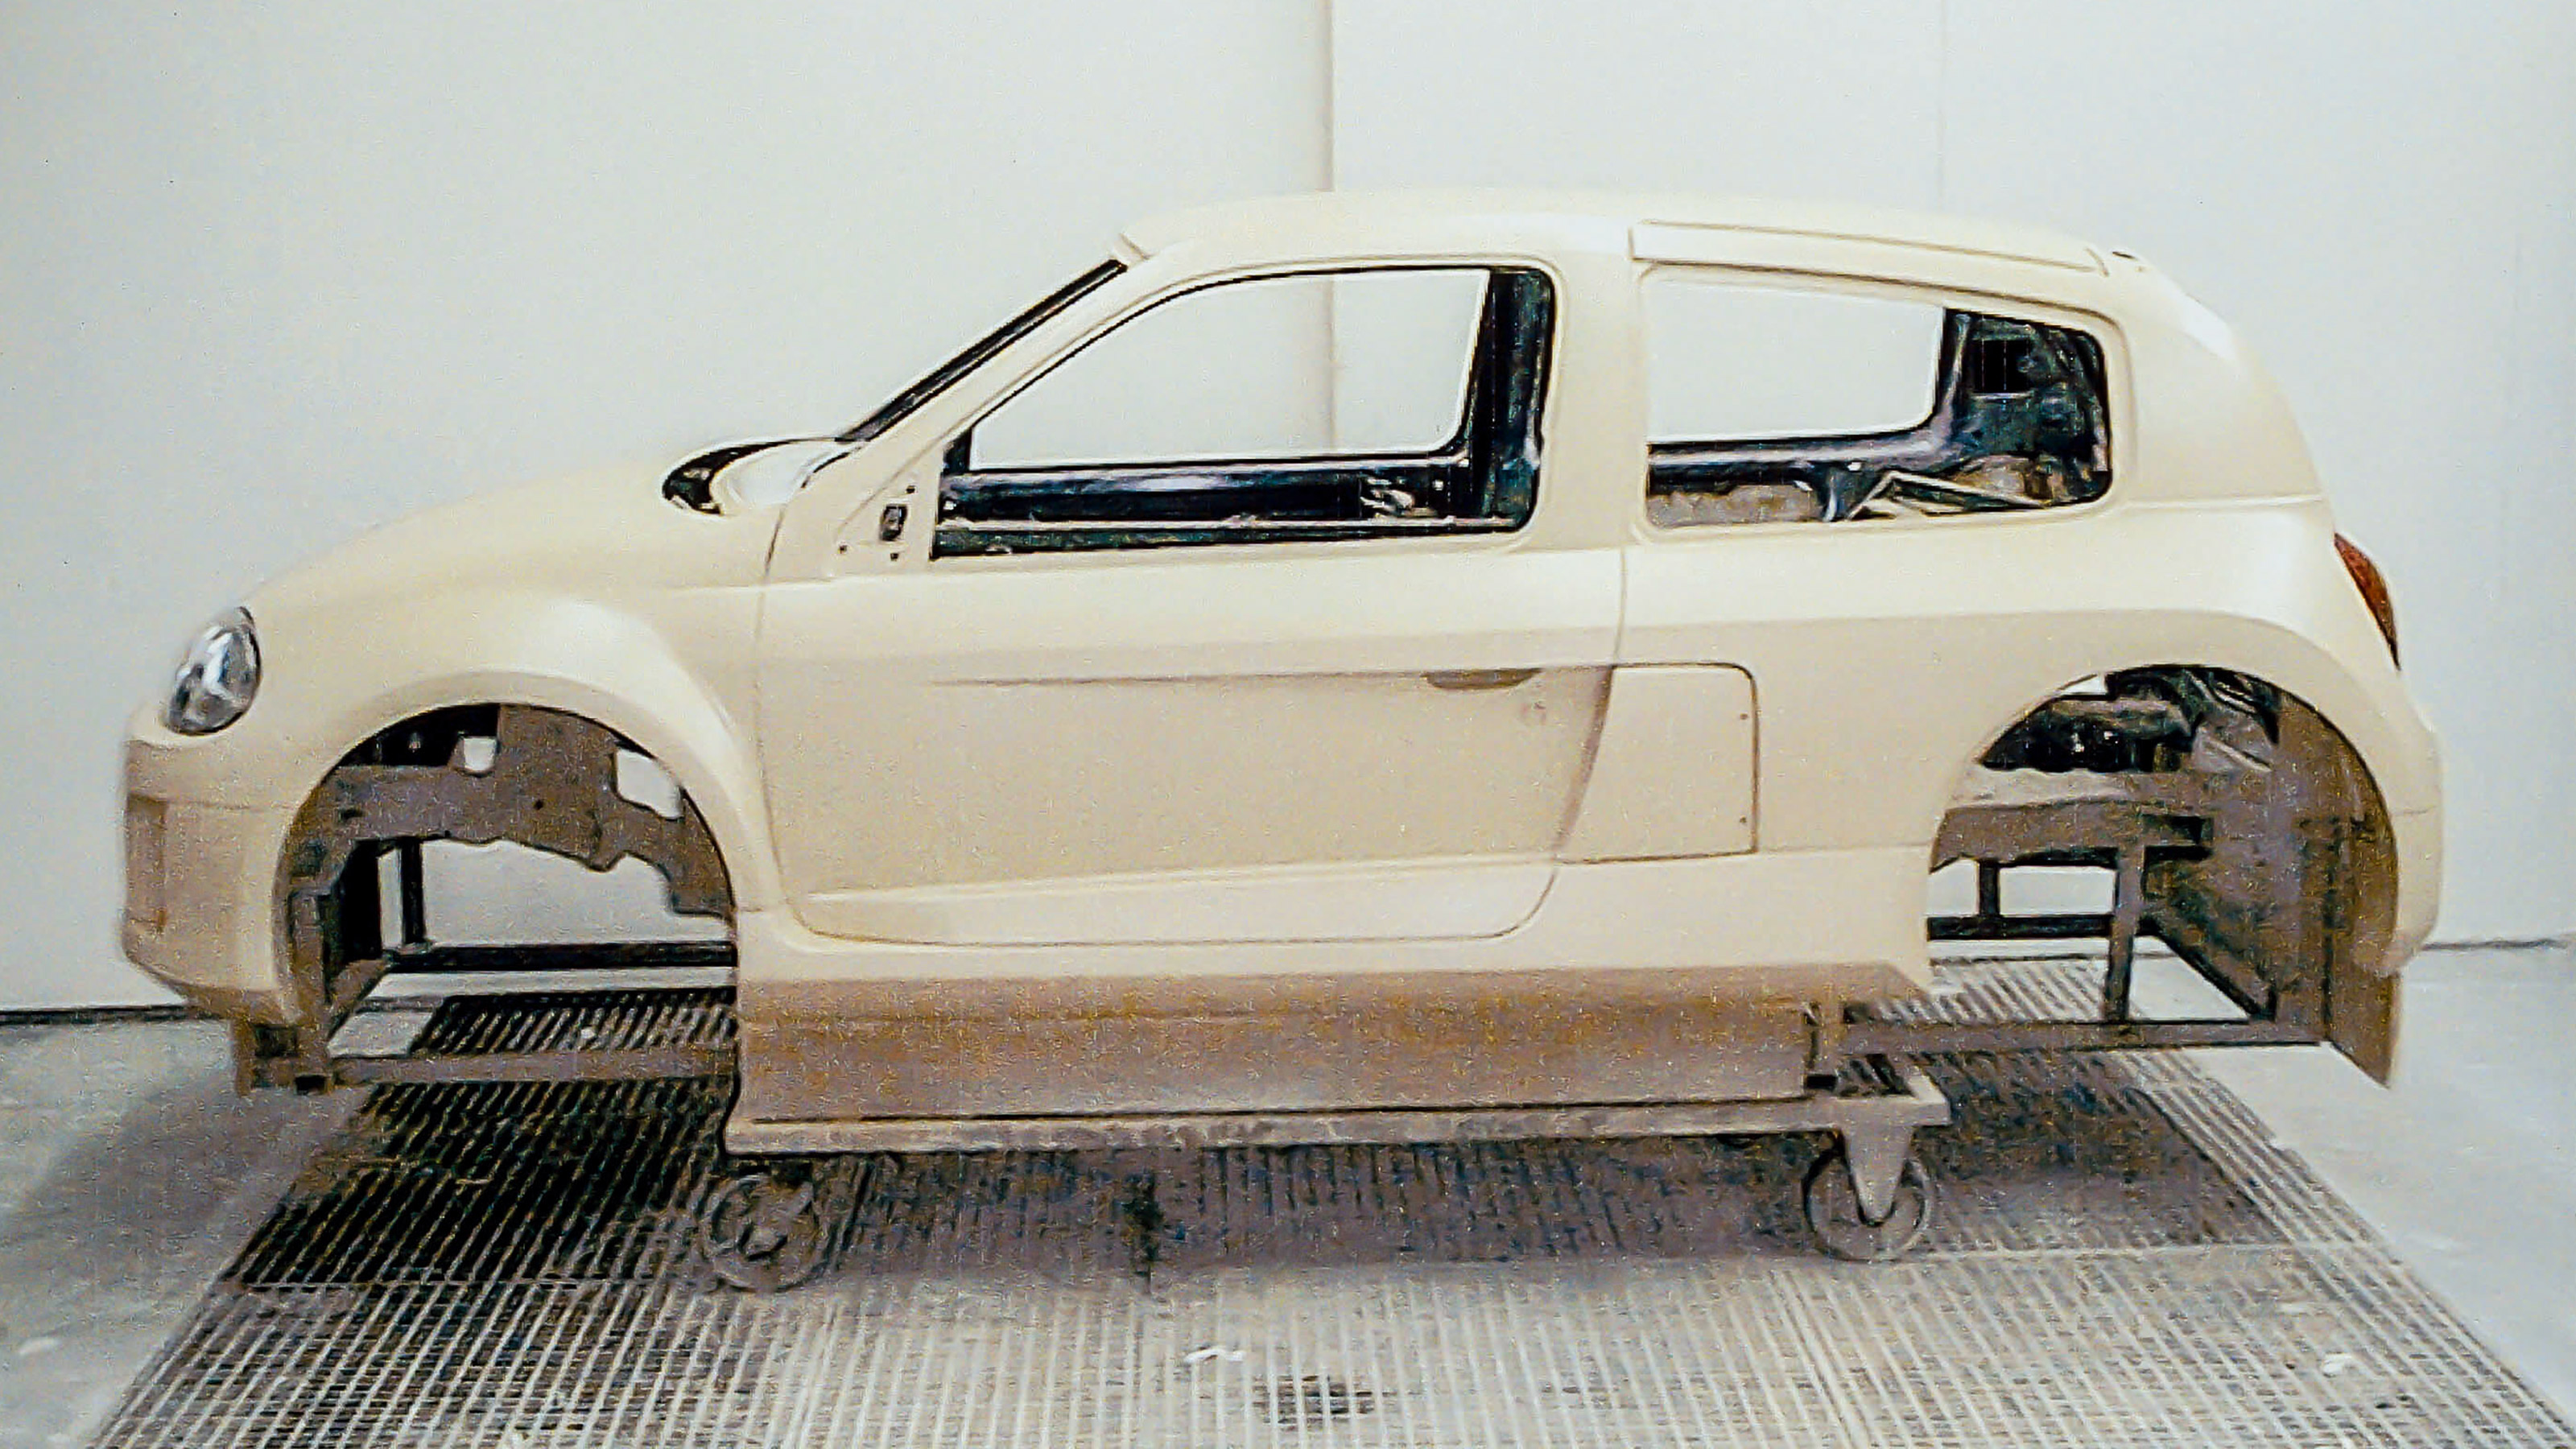 Clio V6 Renault Sport - Wikipedia